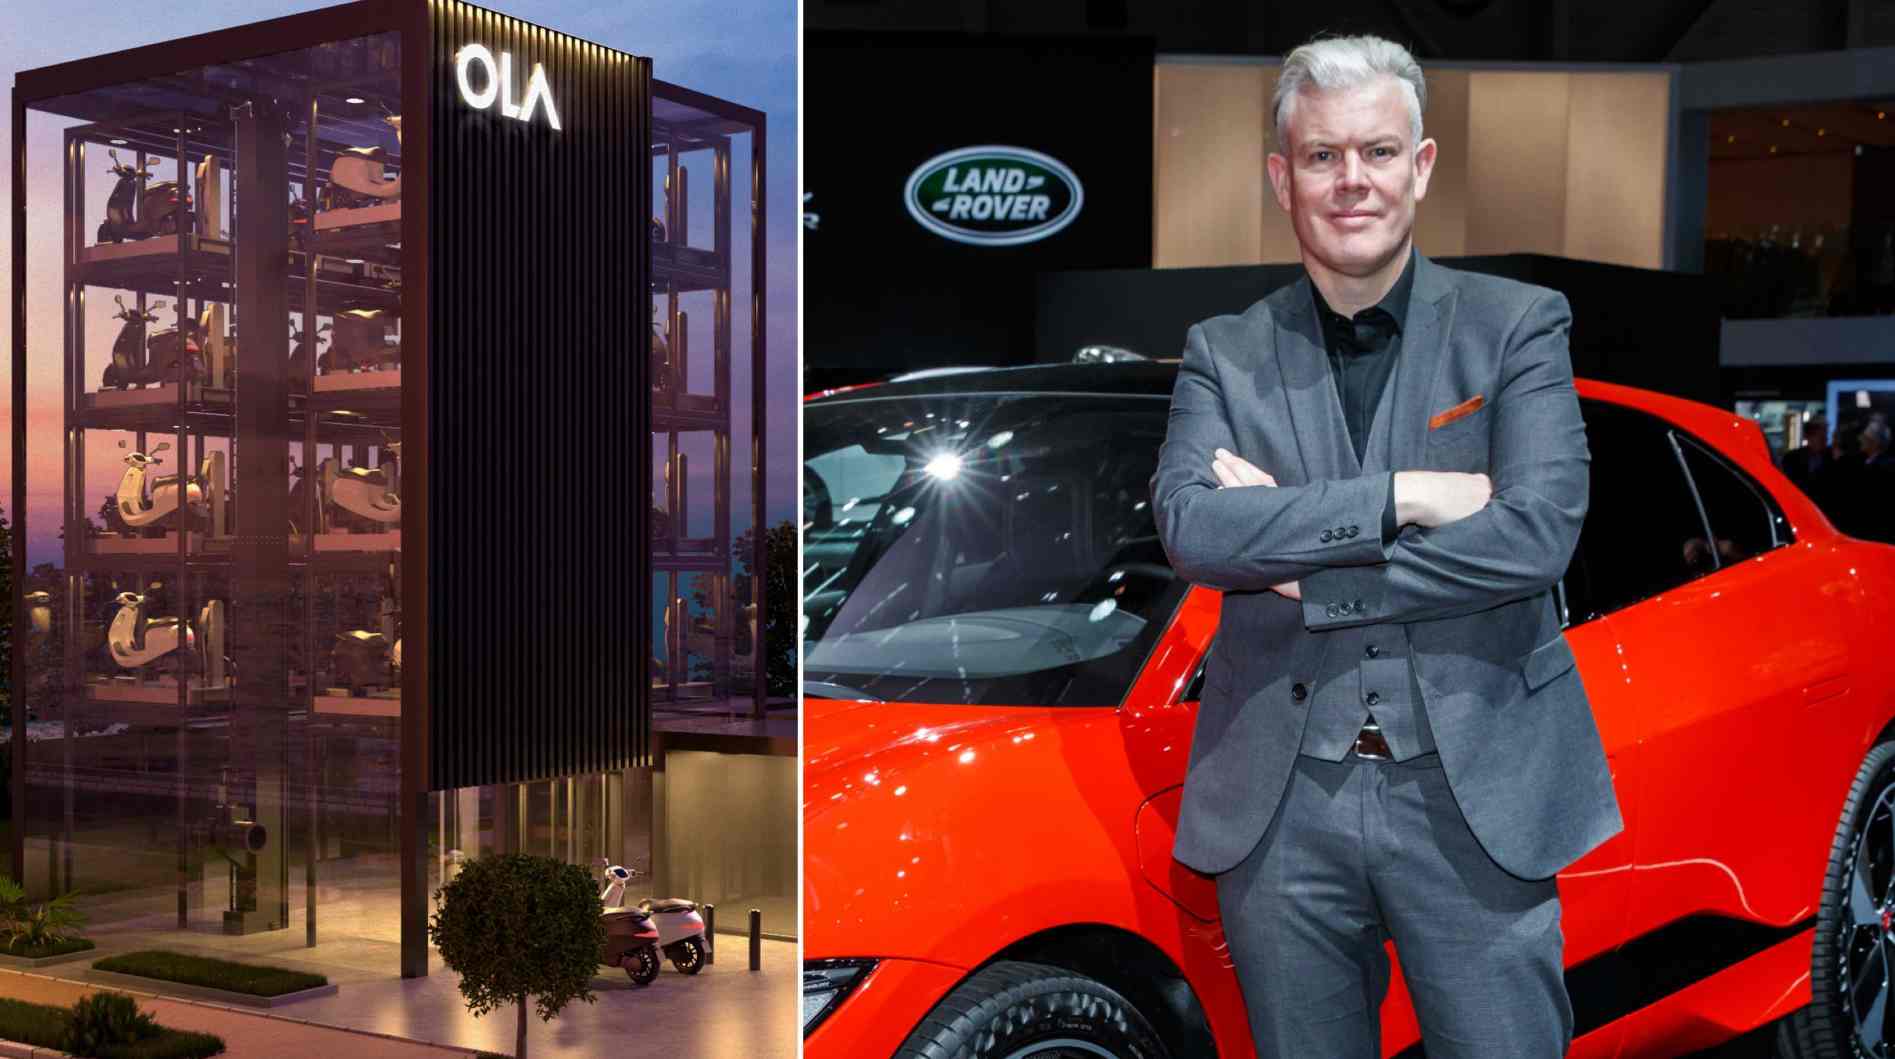 Ola Electric hires former Jaguar design manager Wayne Burgess to design future models - Technology News, Firstpost